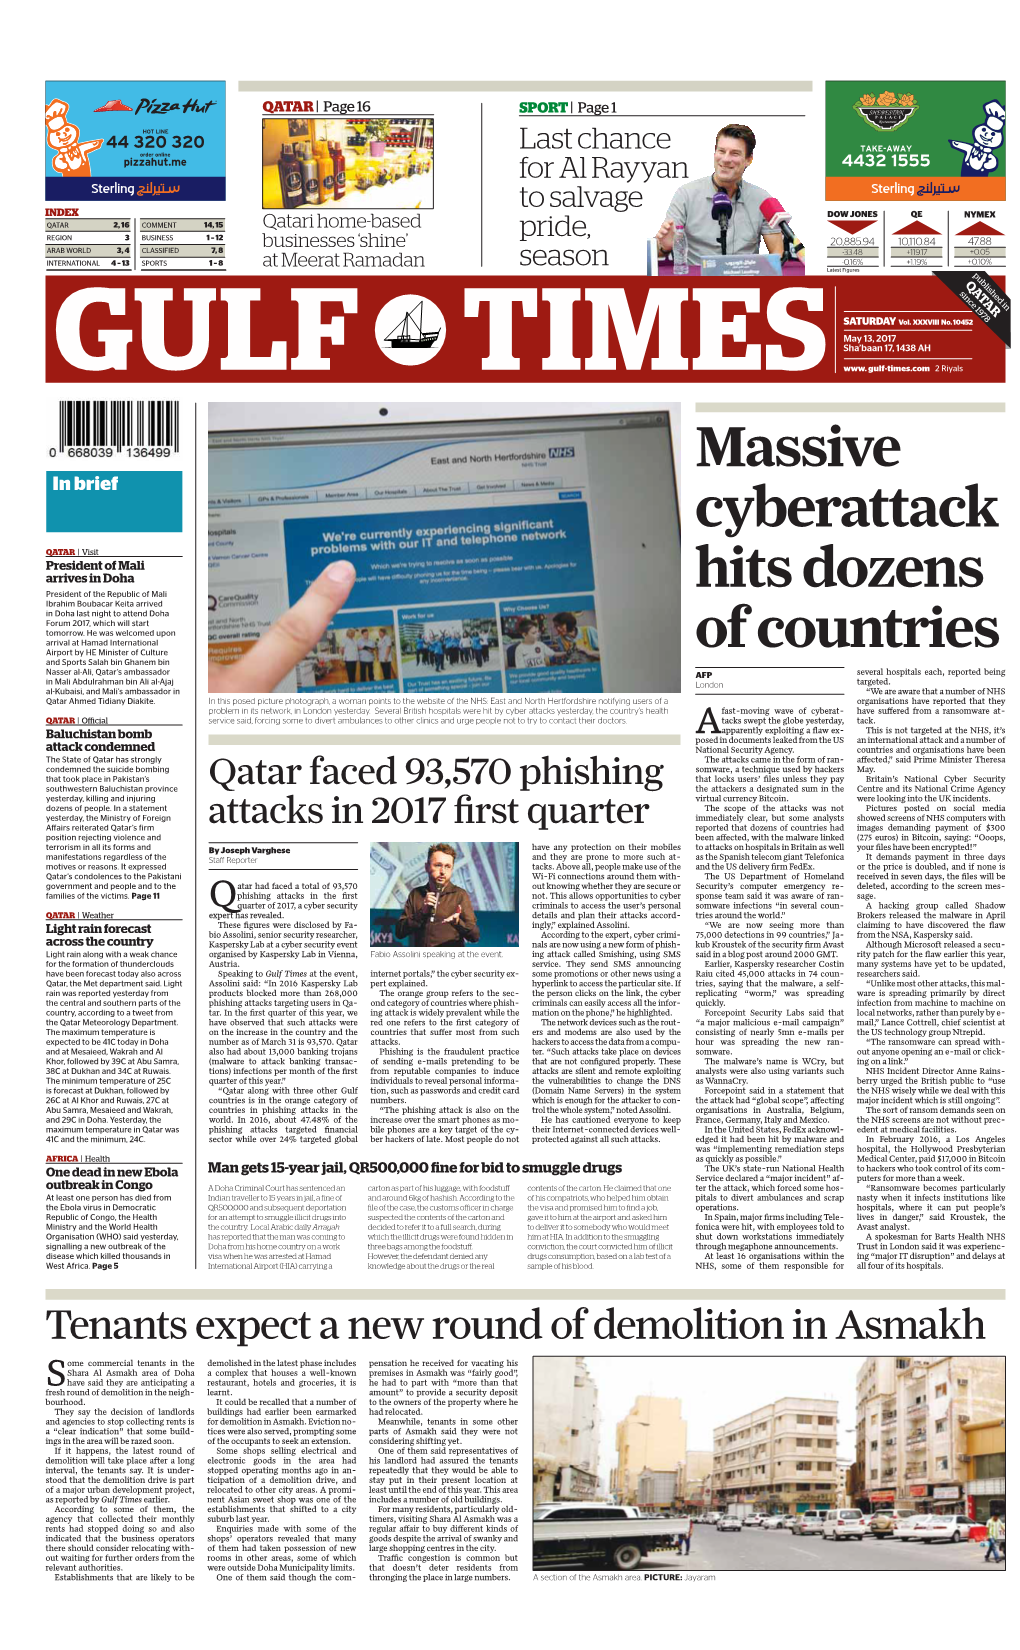 Massive Cyberattack Hits Dozens of Countries